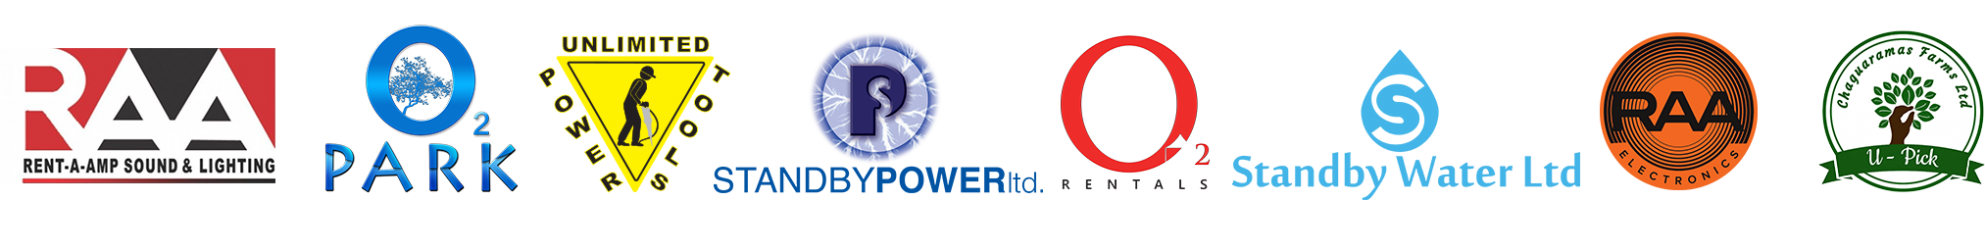 Power Group Logos(3)